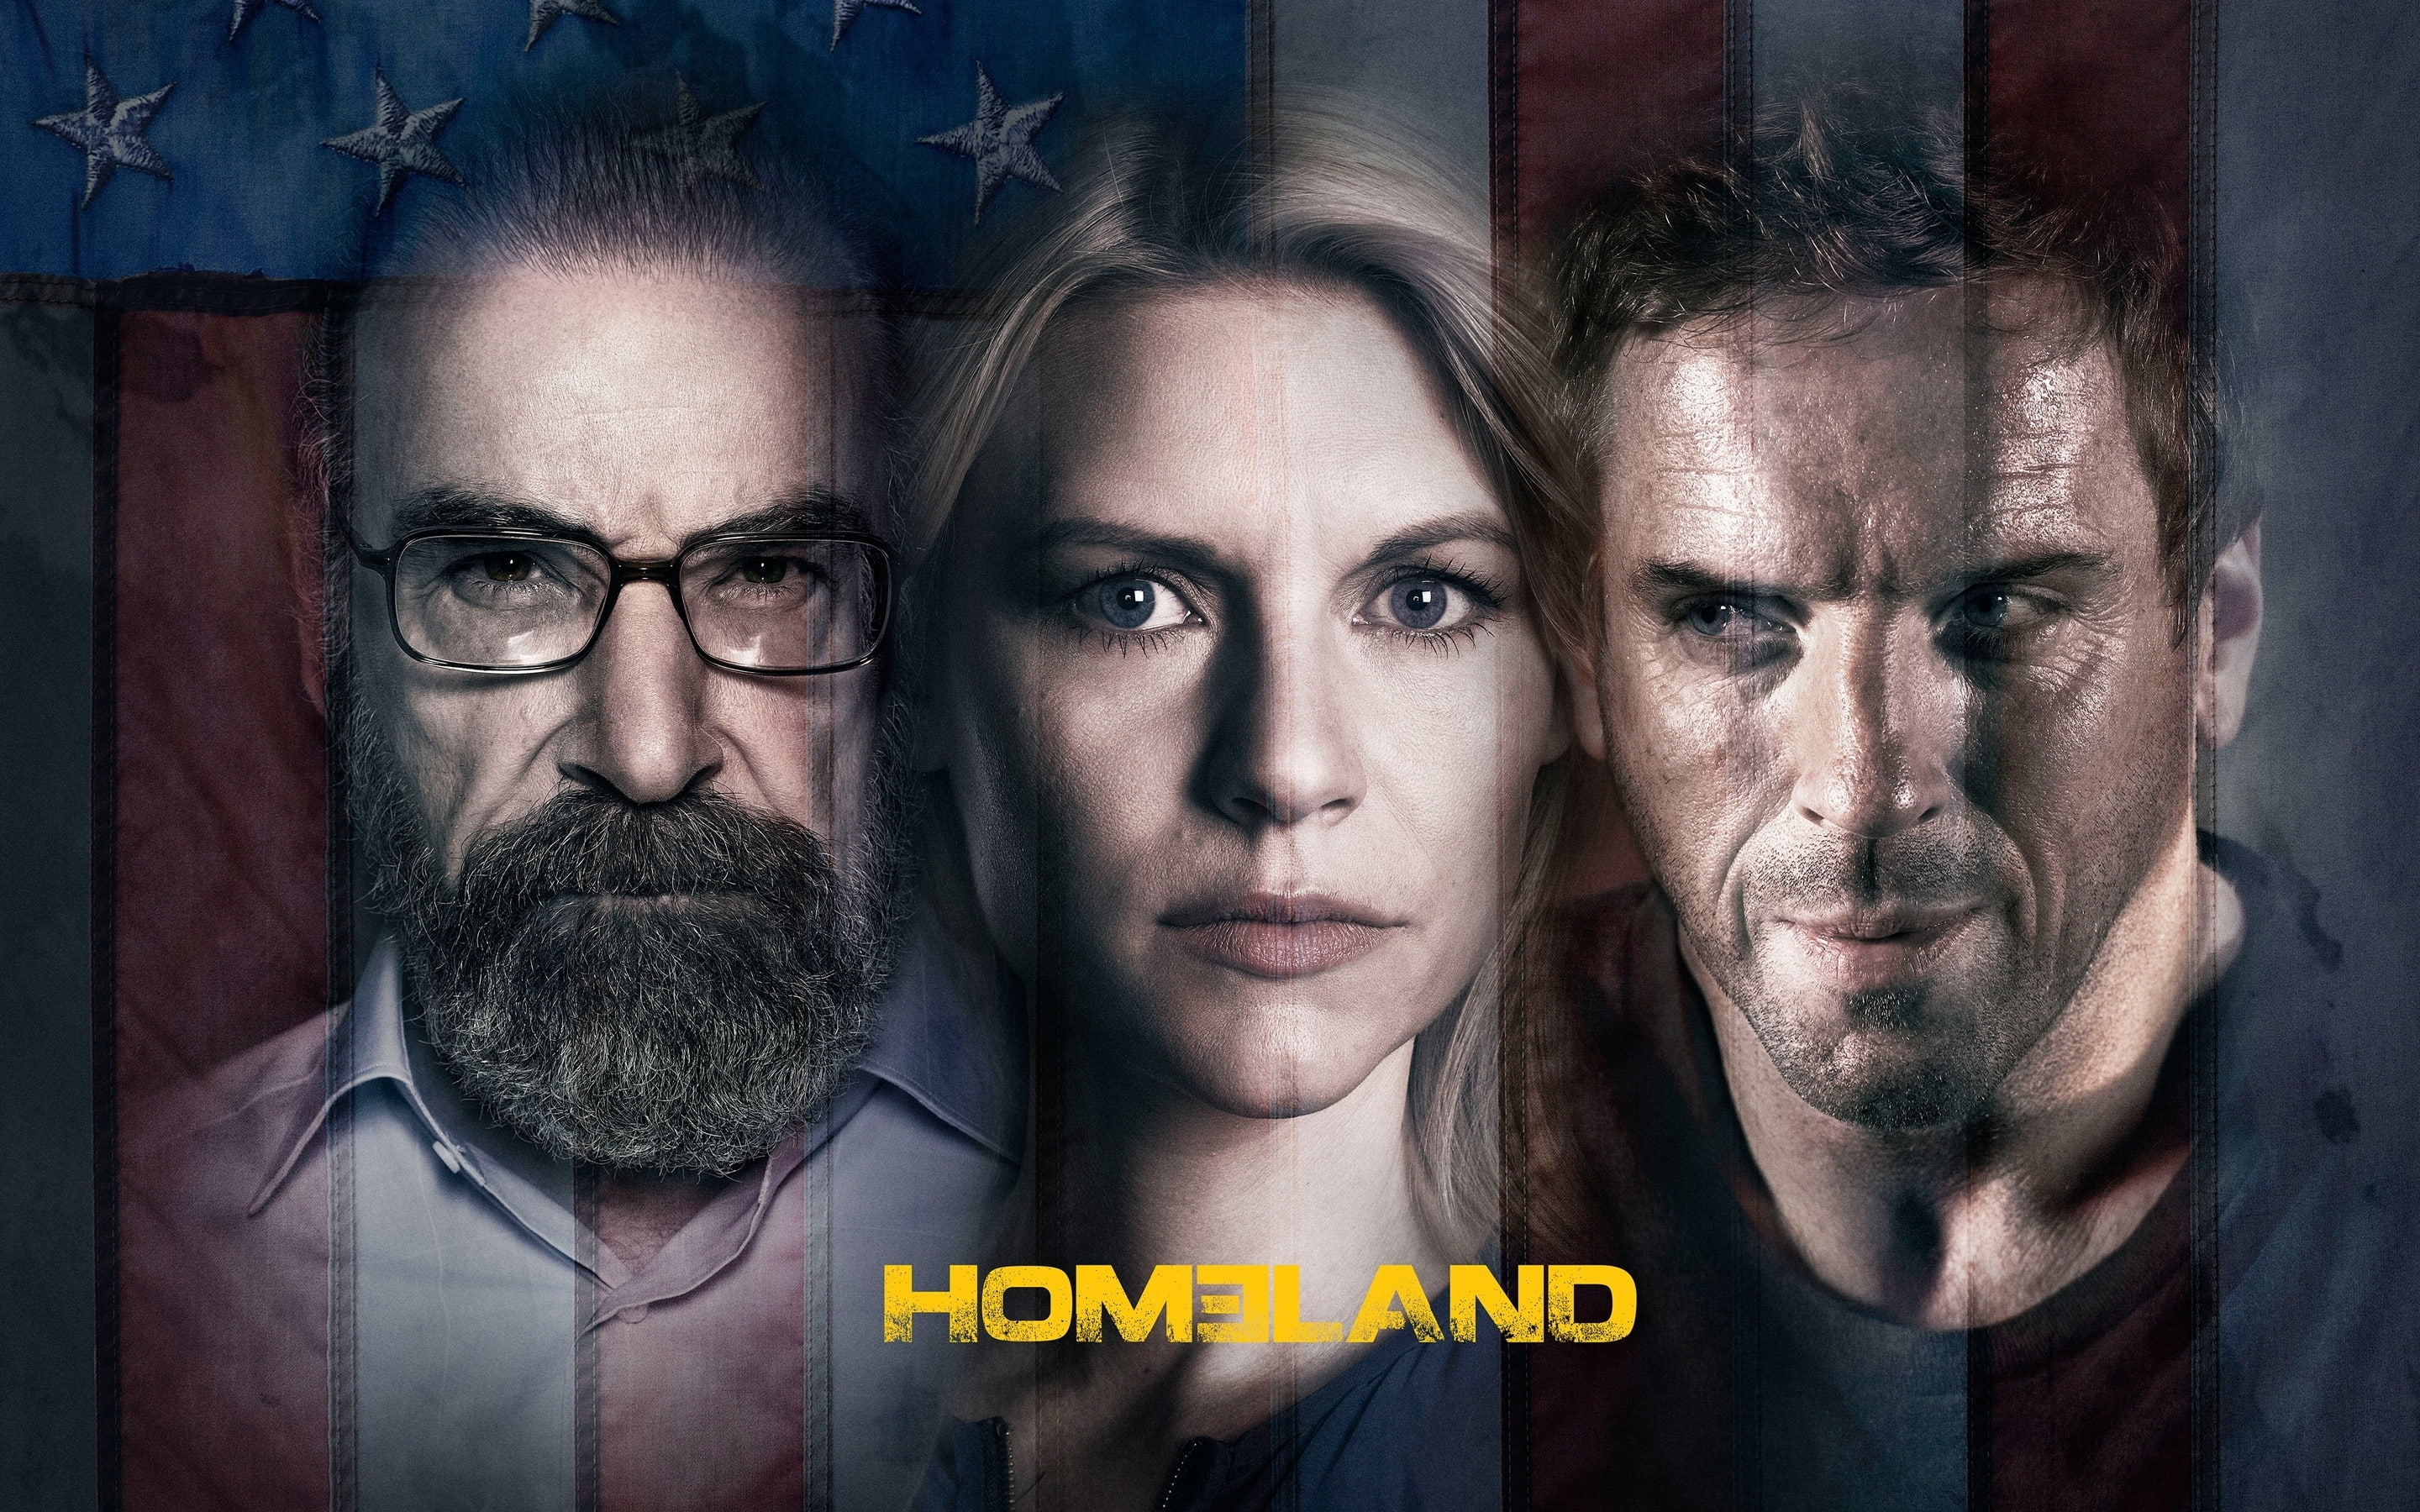 Homeland Tv Series, homeland characters image